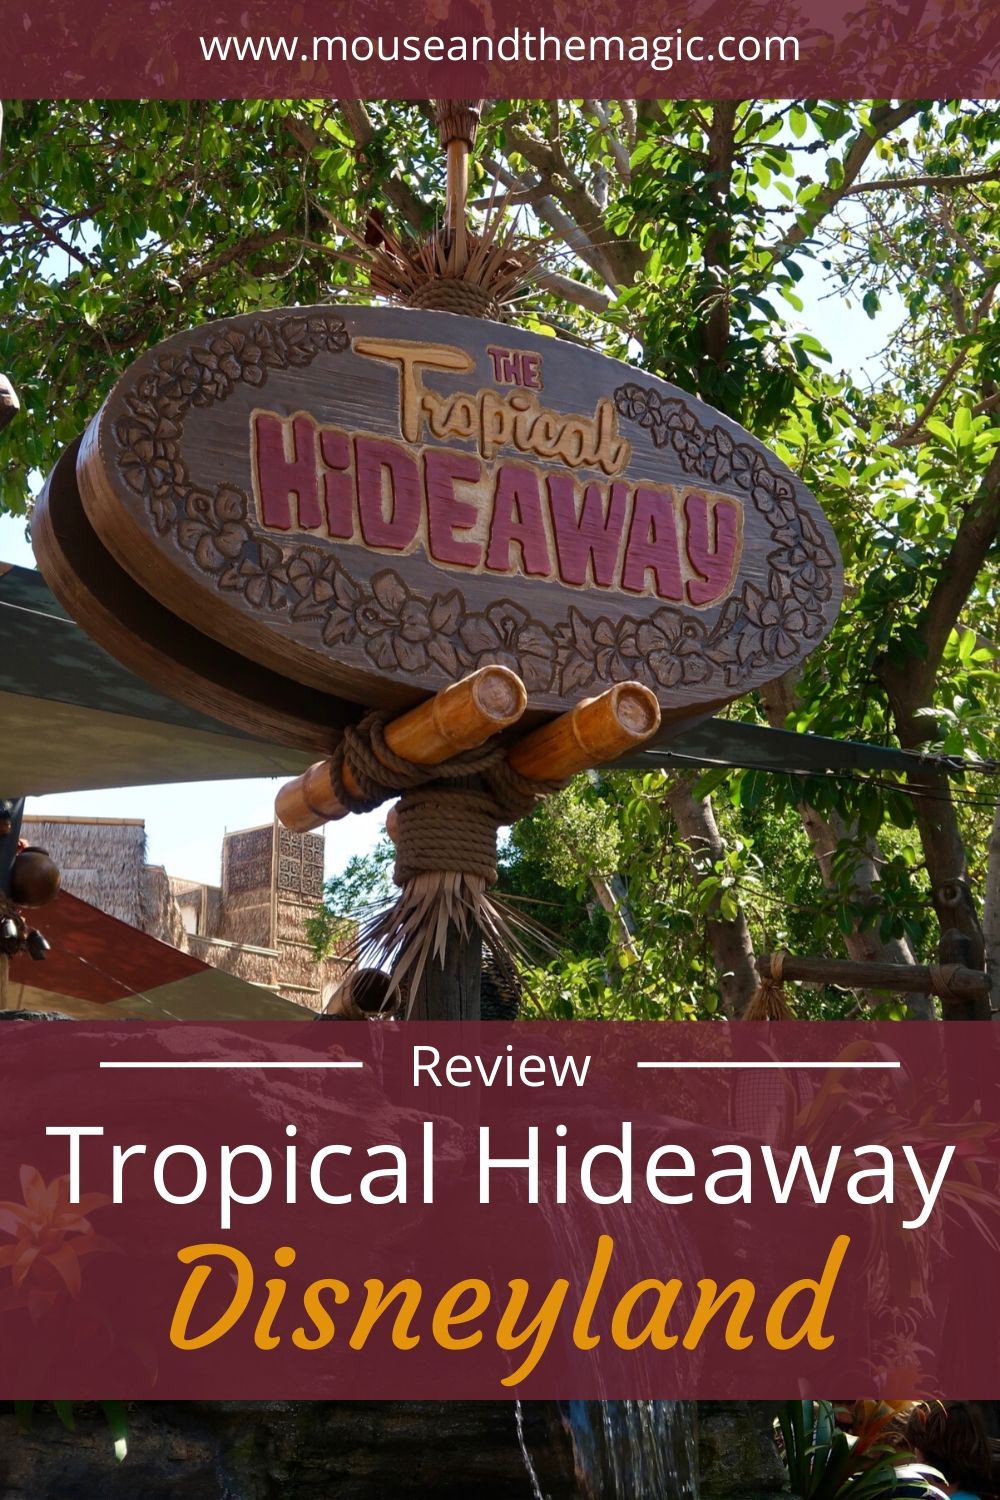 Review- Tropical Hideaway - Disneyland